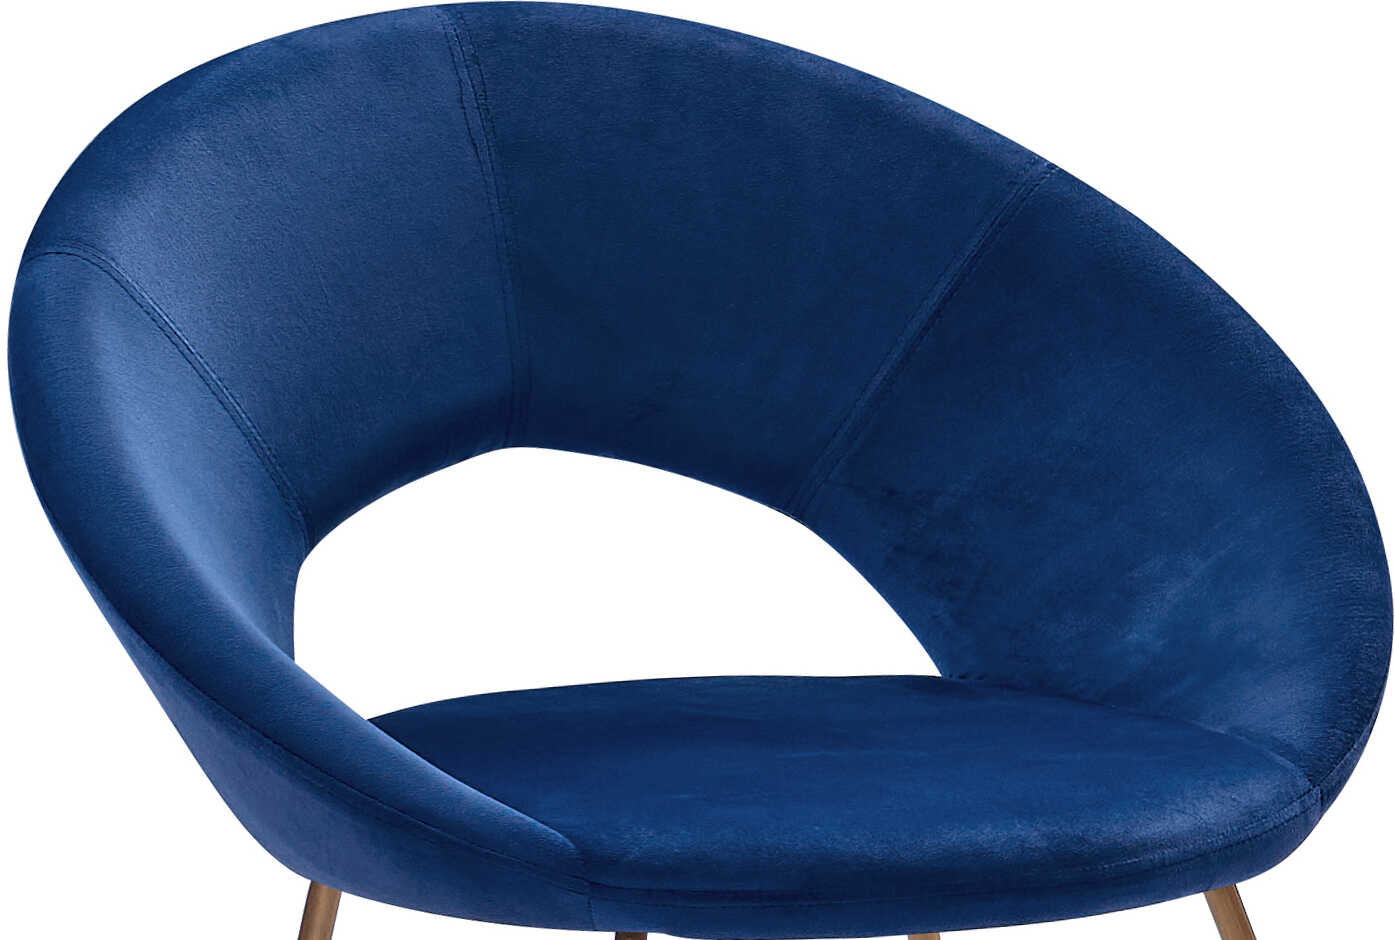 Esszimmerstuhl Design-Sessel Samt blau Metallbeine gold LENNY